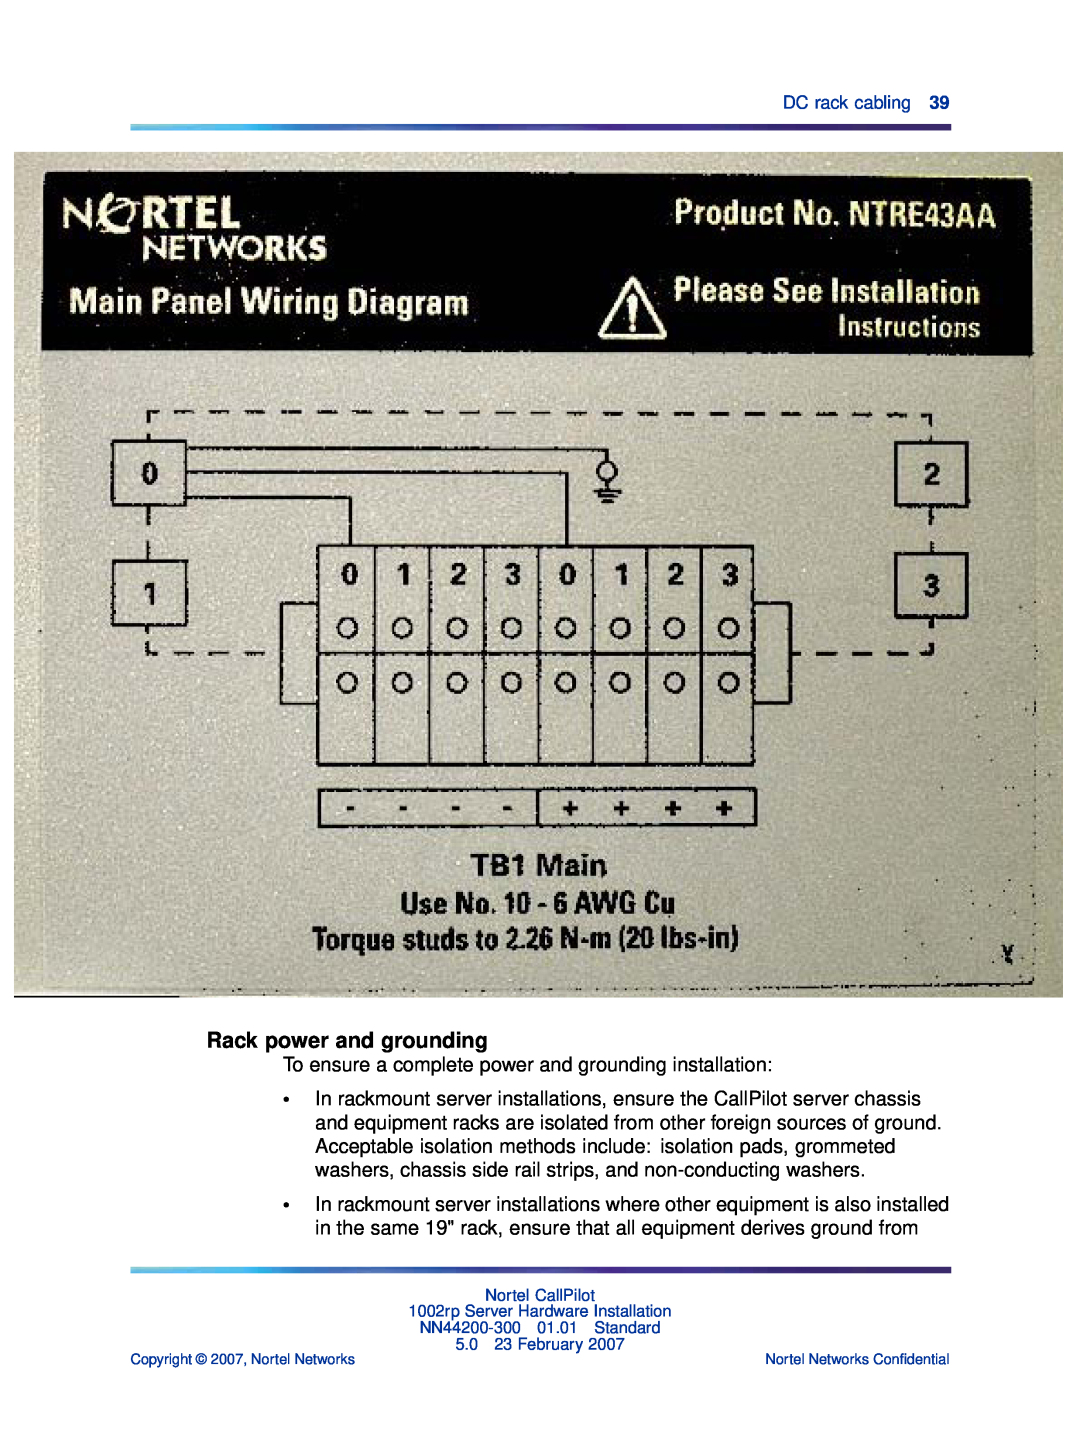 Nortel Networks NN44200-300 manual Rack power and grounding 